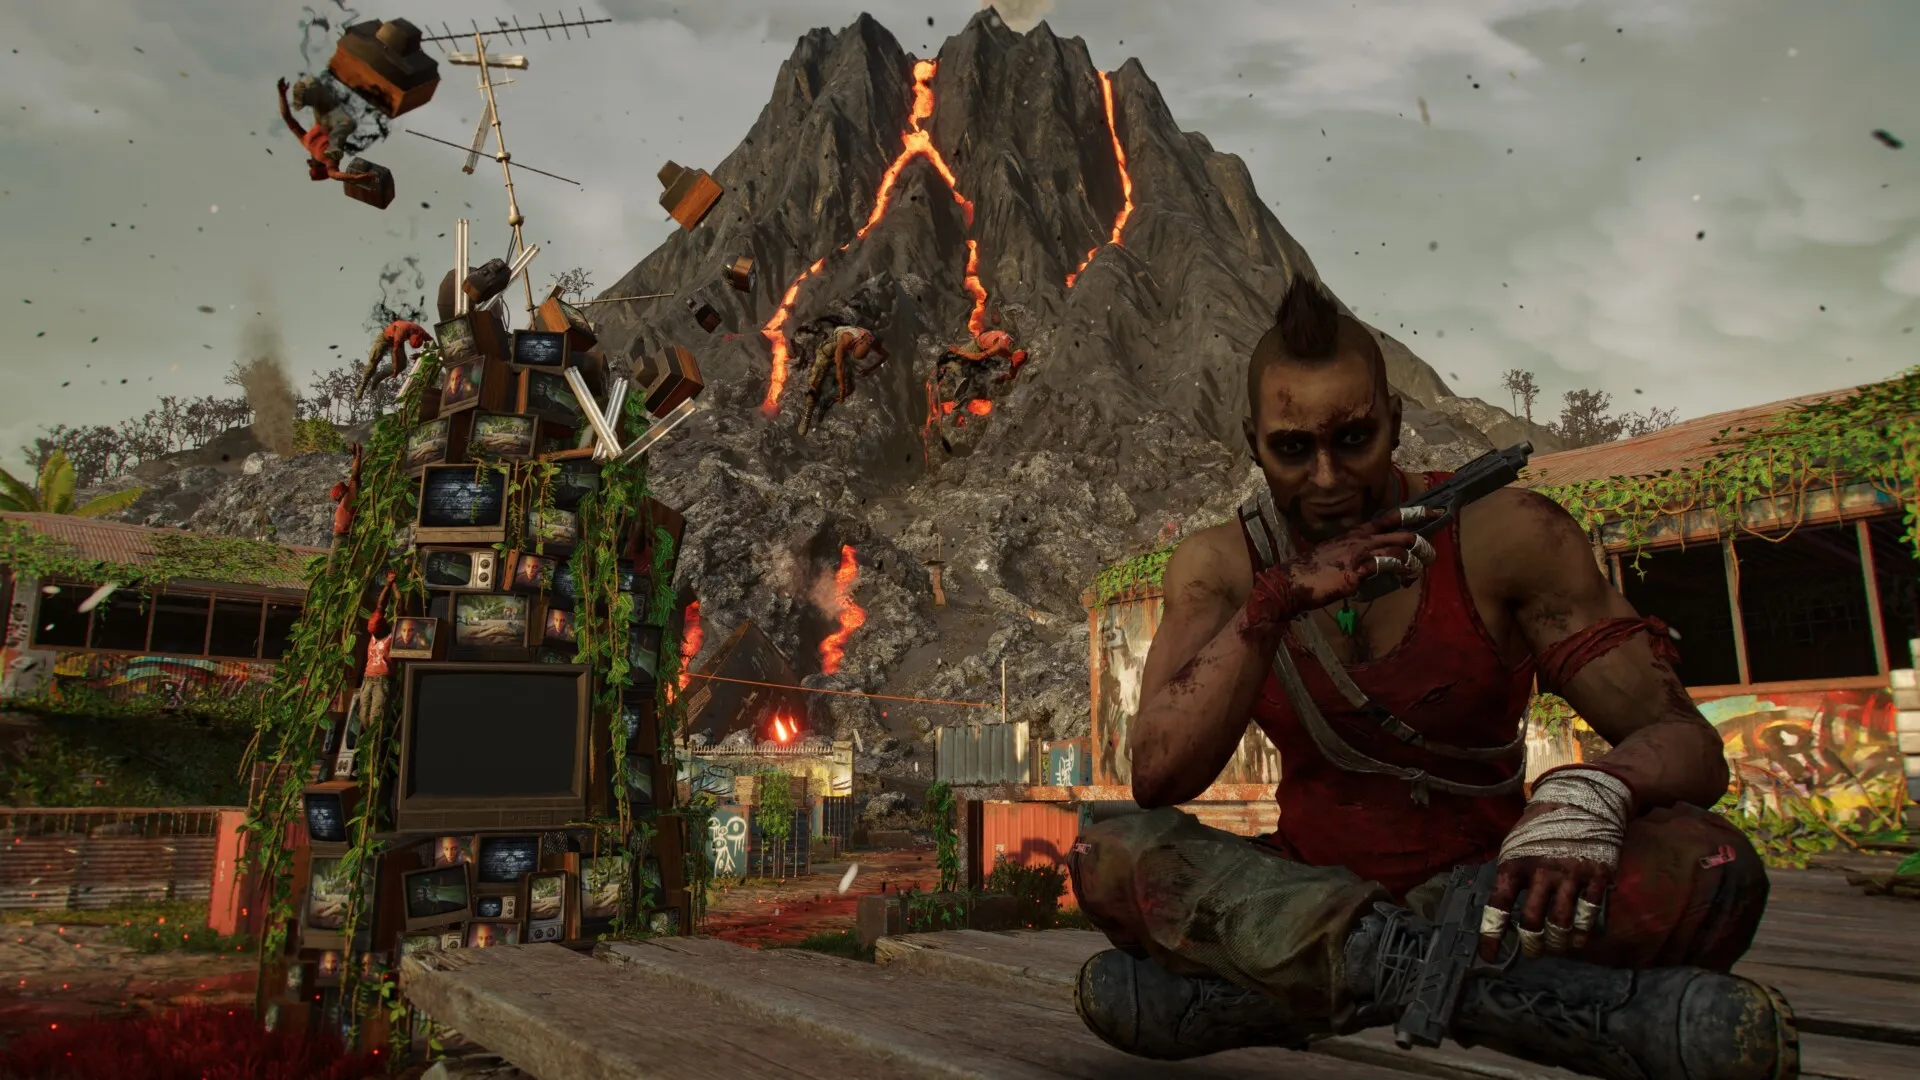 Extractie Huiswerk maken Kelder Far Cry 6 Vaas: Insanity review — A rowdy rogue-lite romp